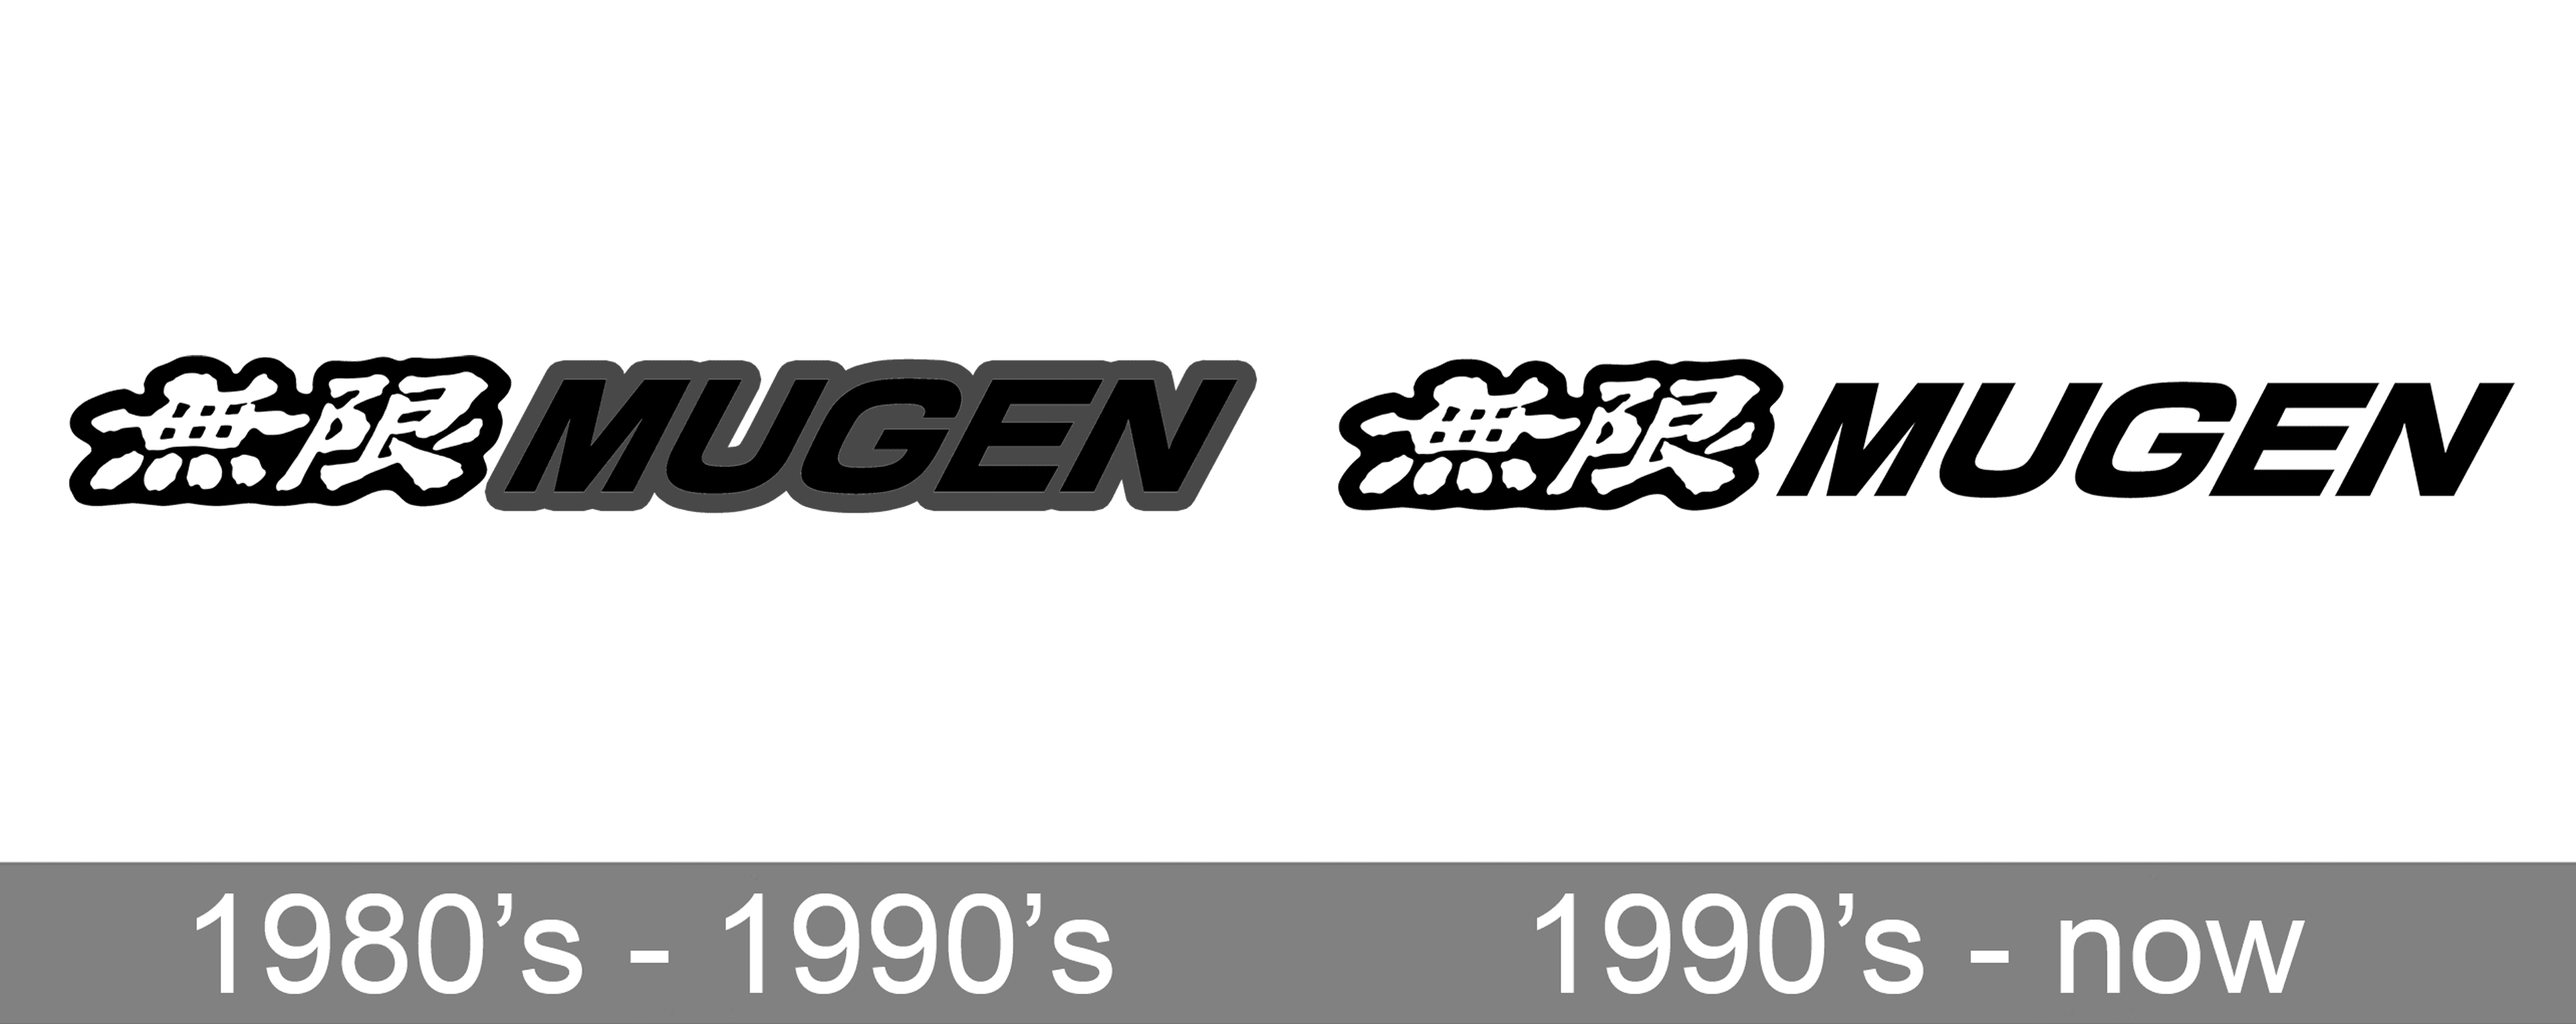 0 Result Images of Mugen Power Logo Png - PNG Image Collection